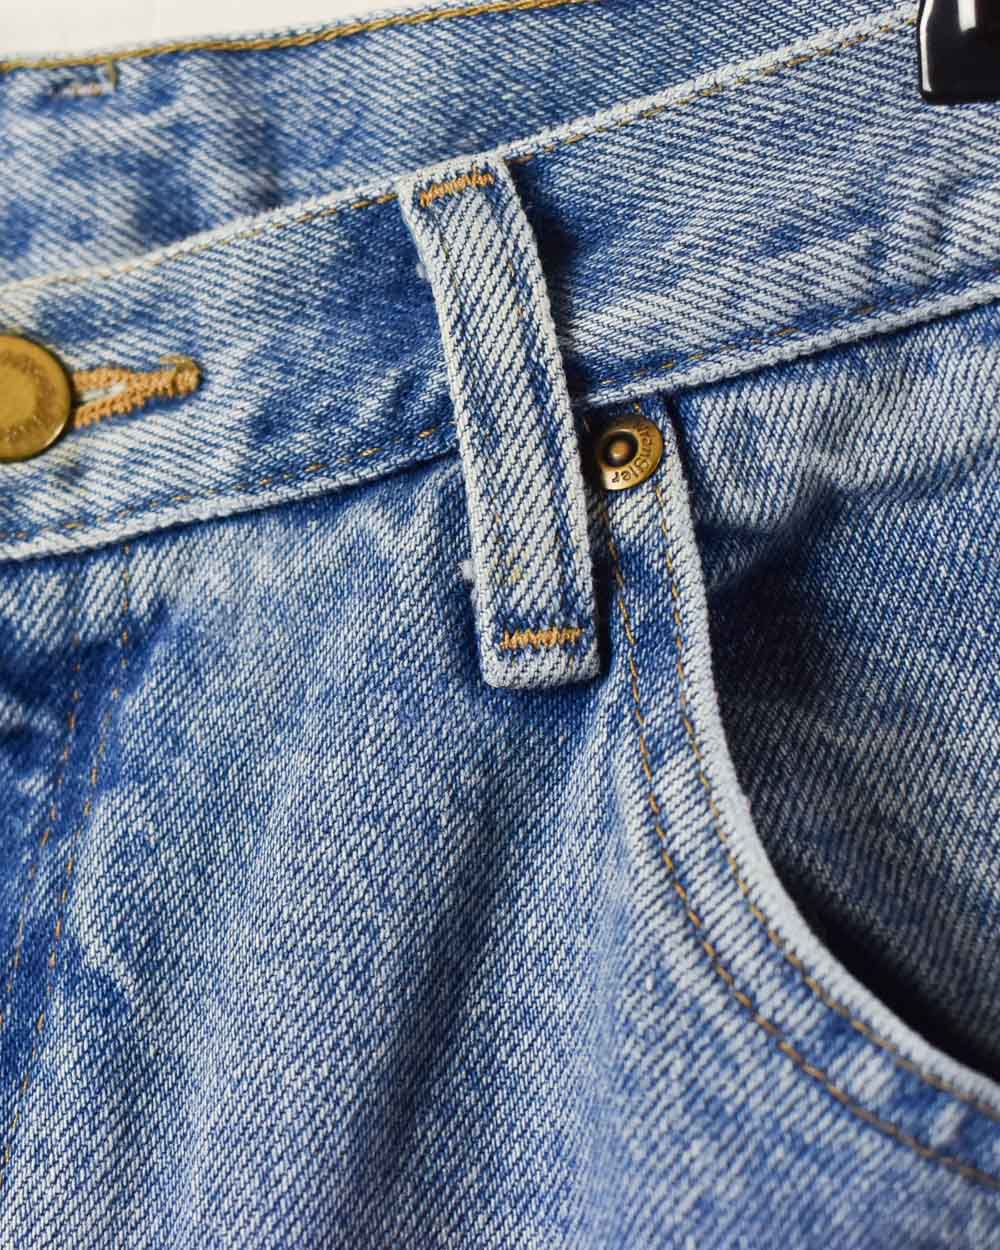 Blue Wrangler Jeans - W34 L33